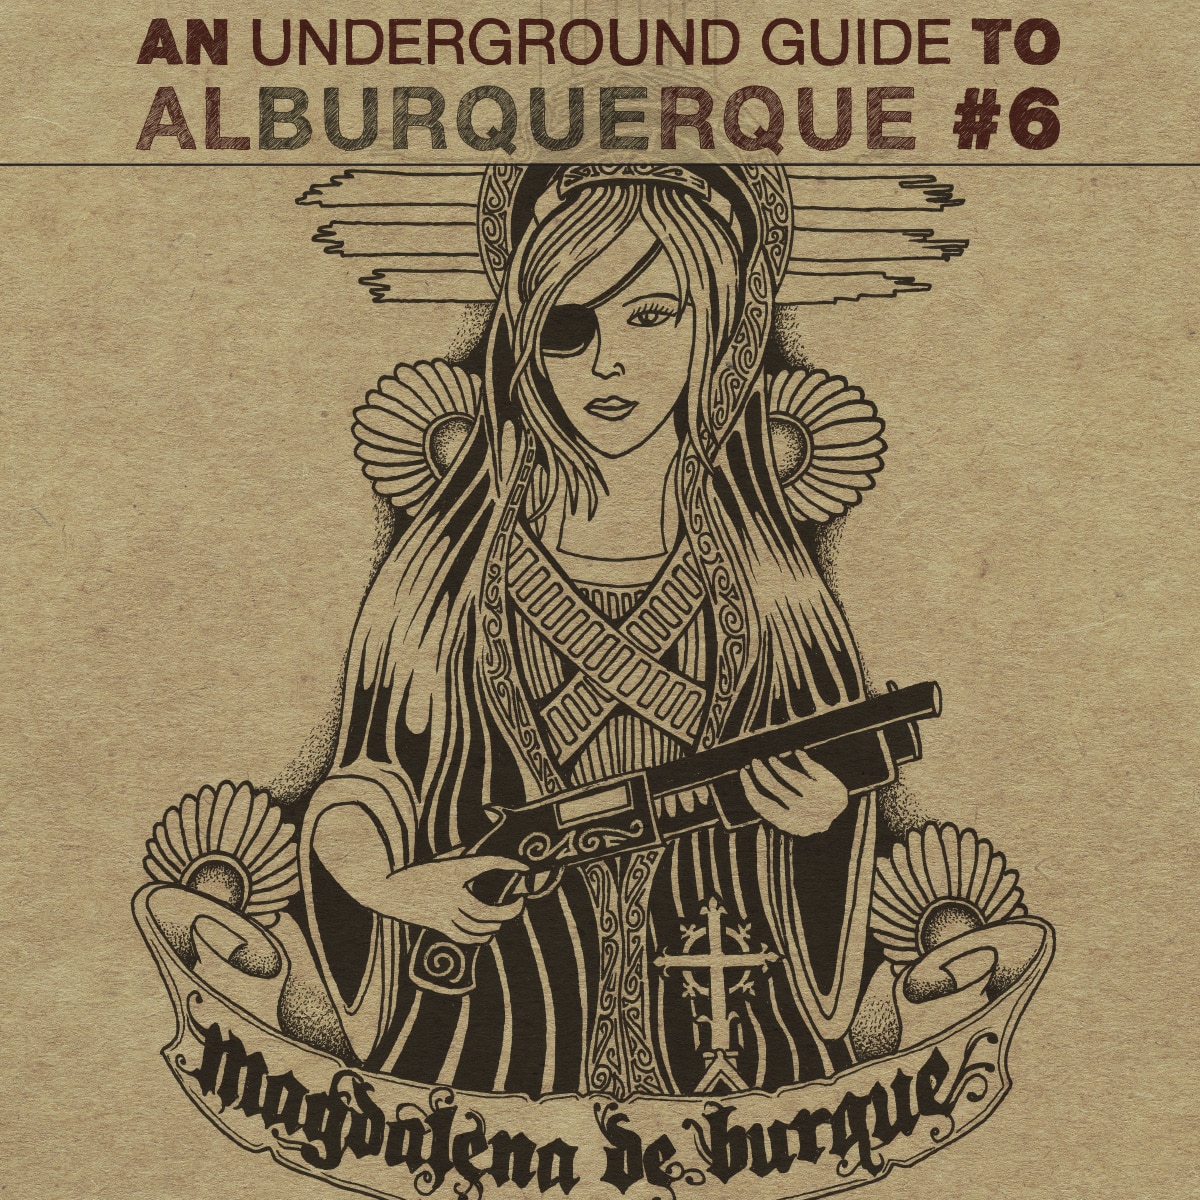 An Underground Guide to Alburquerque